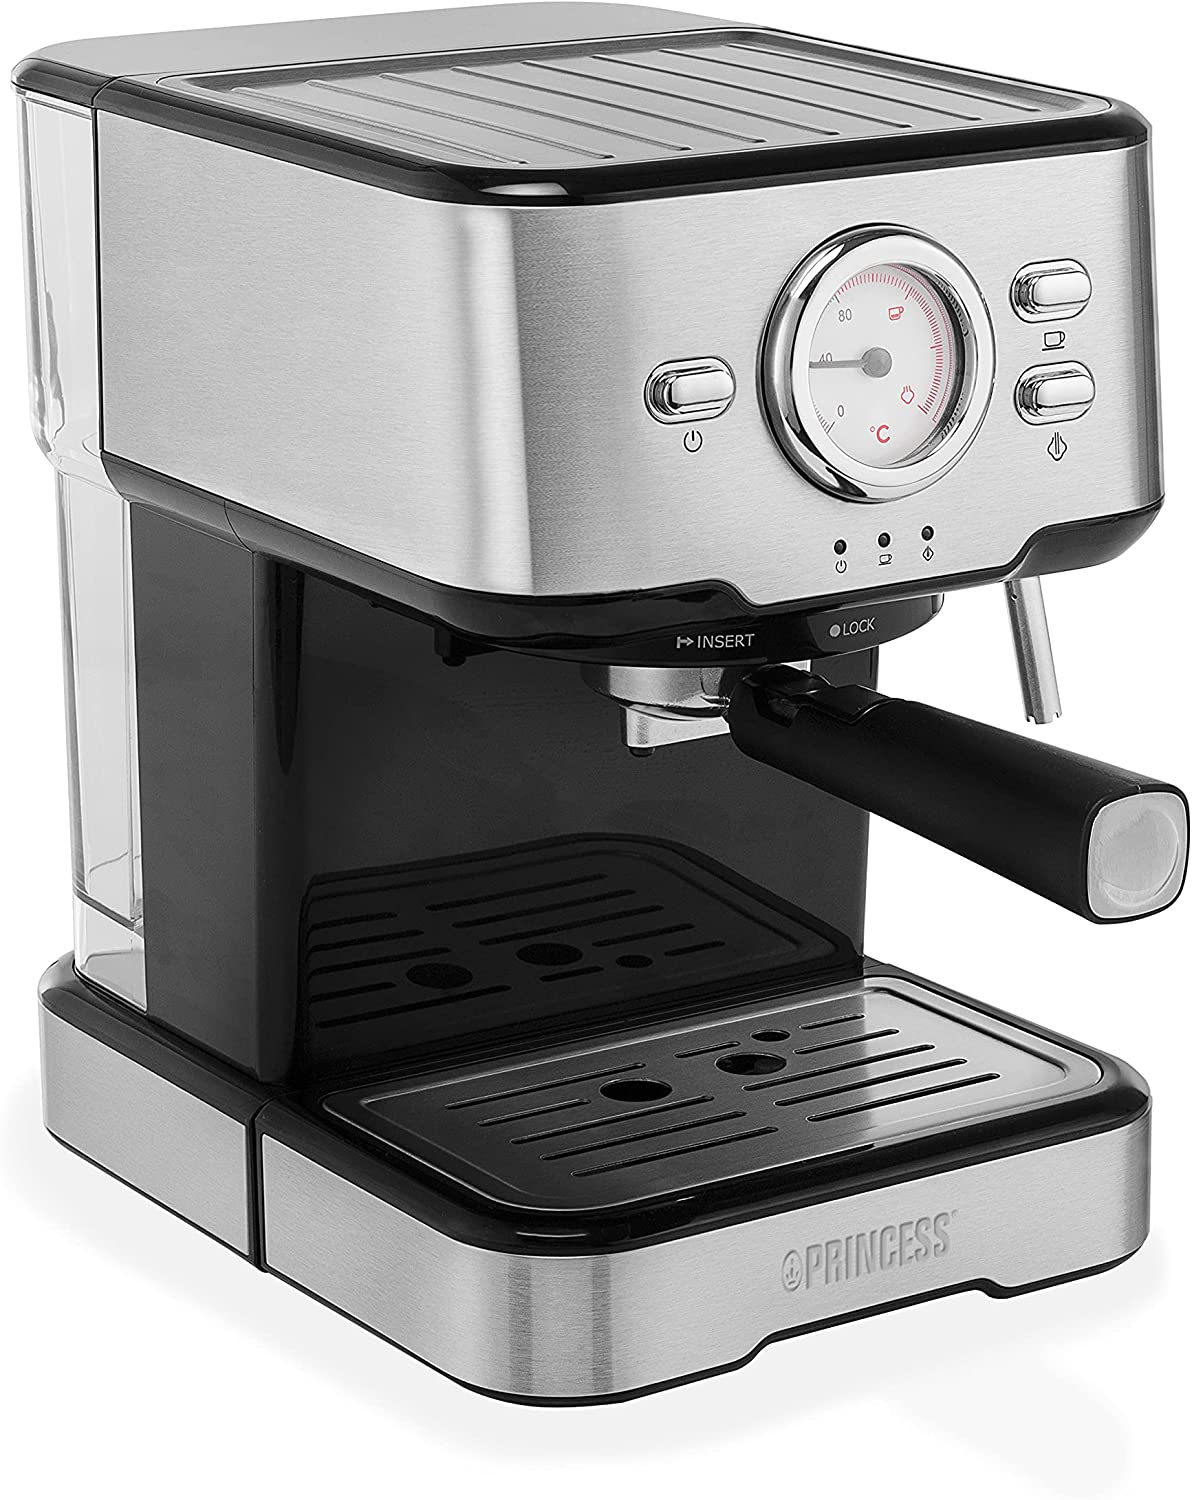 Princess 249412 Espresso and Capsule Machine, Stainless Steel, Also Milk Foam Variants such as Cappuccino, Latte and Espresso Macchiato, 20 Bar, Silver